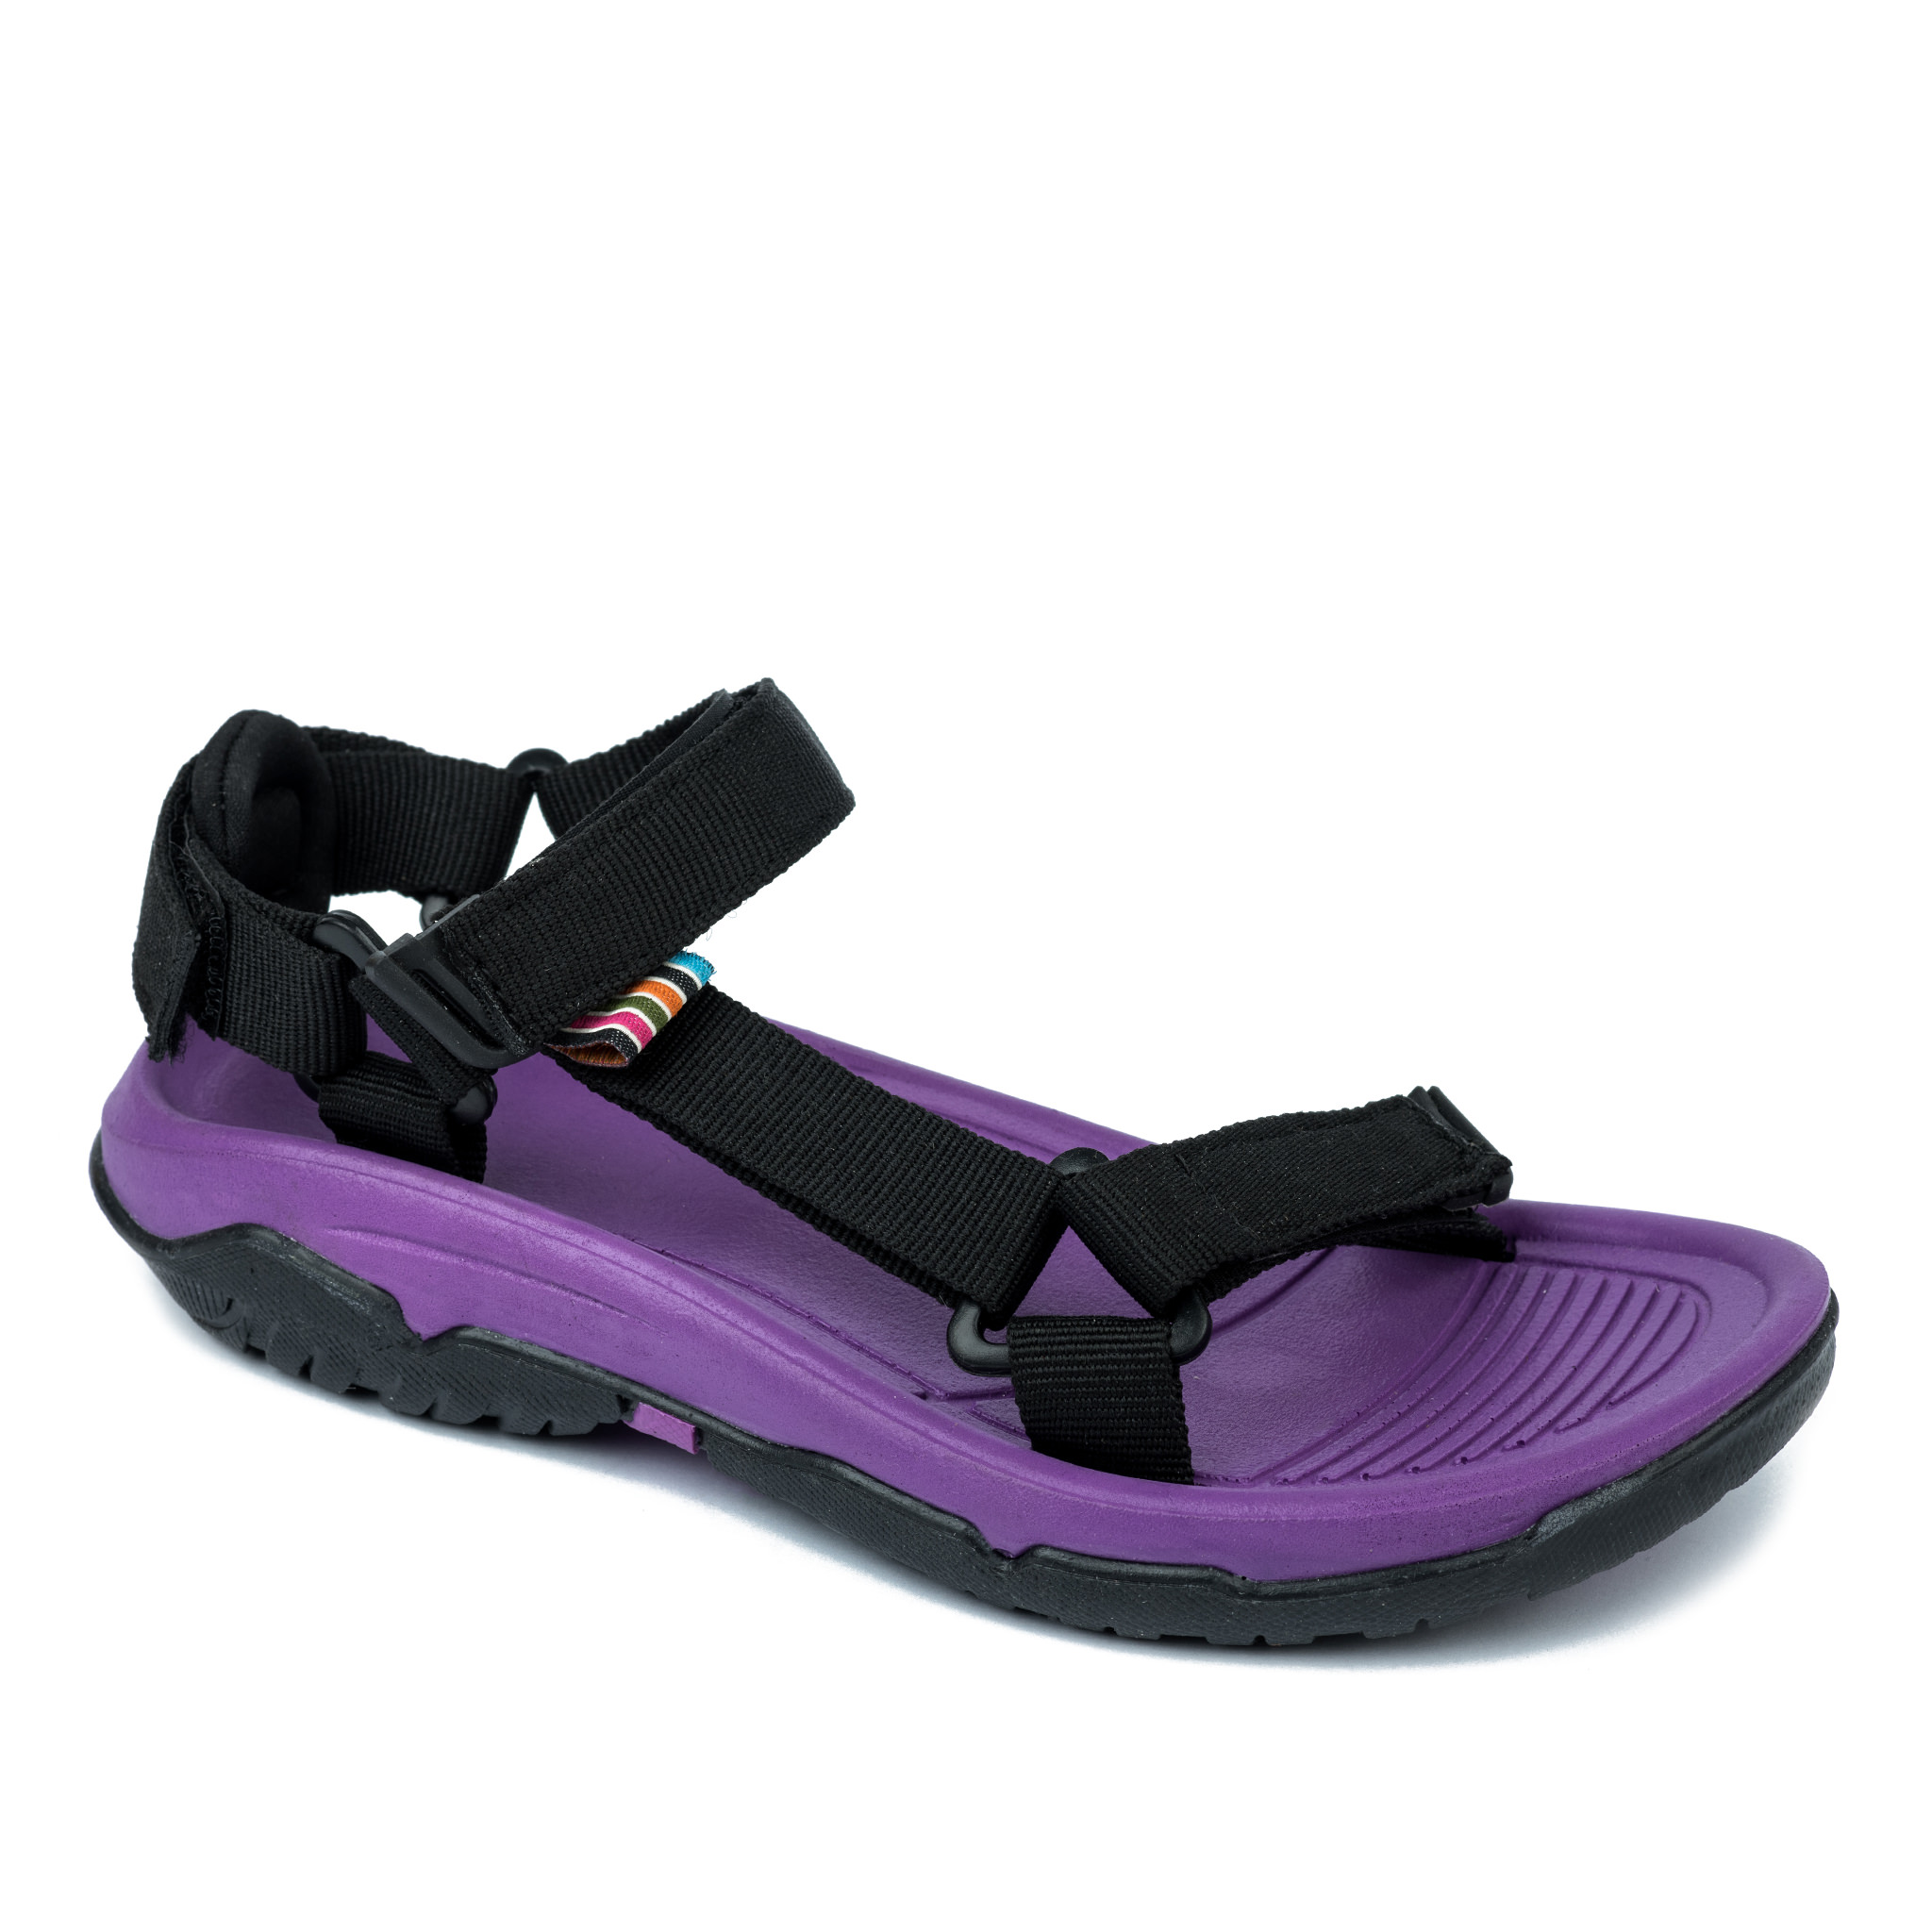 Women sandals A252 - BLACK